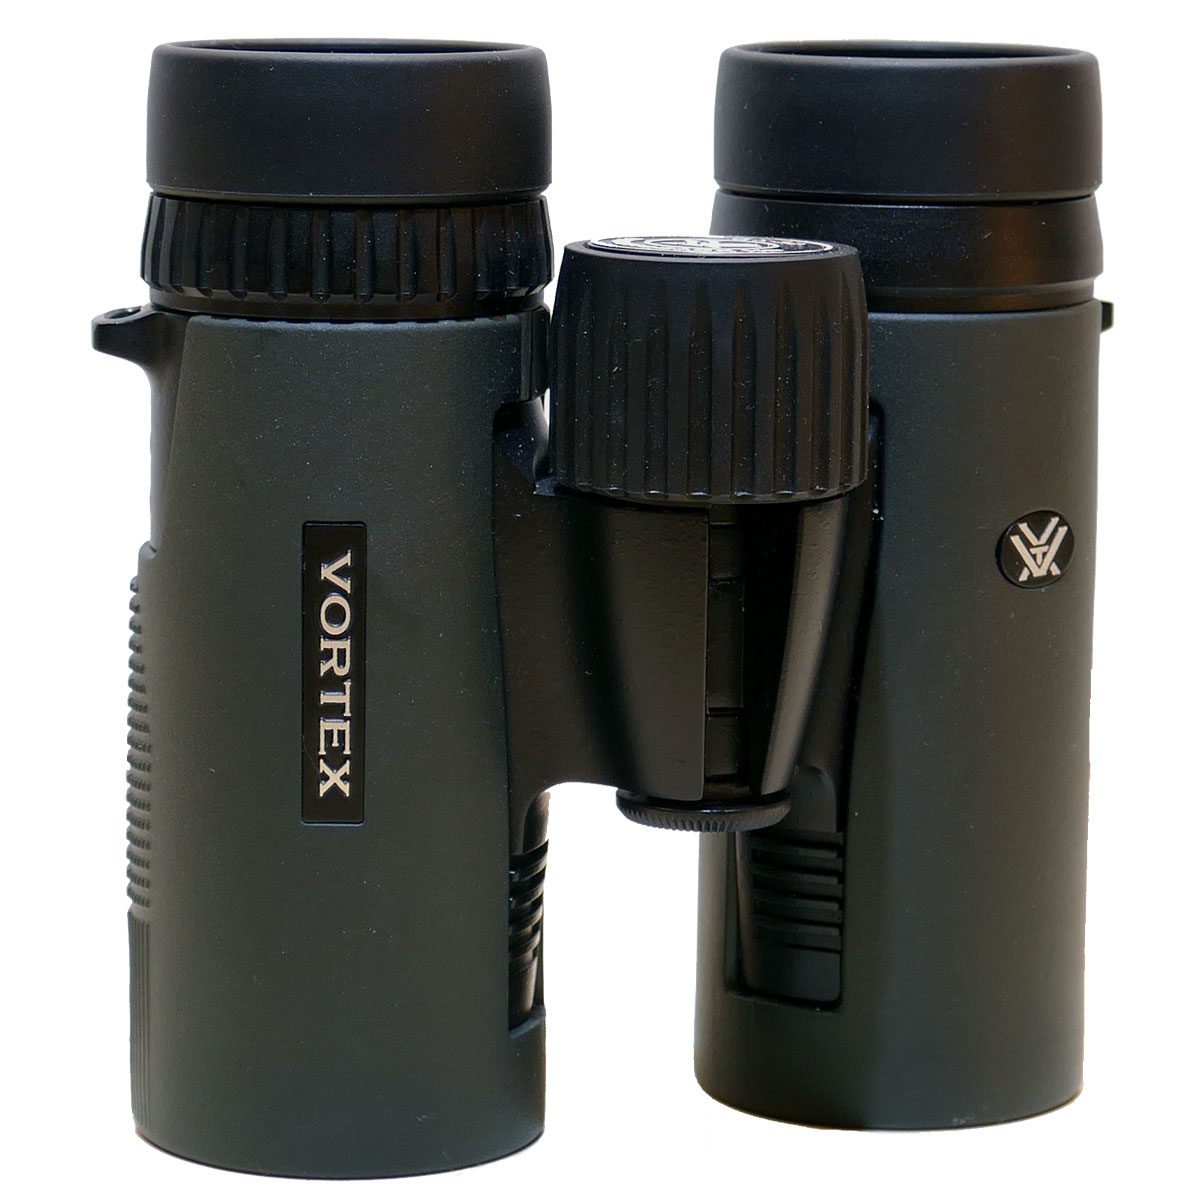 dark green and black binoculars